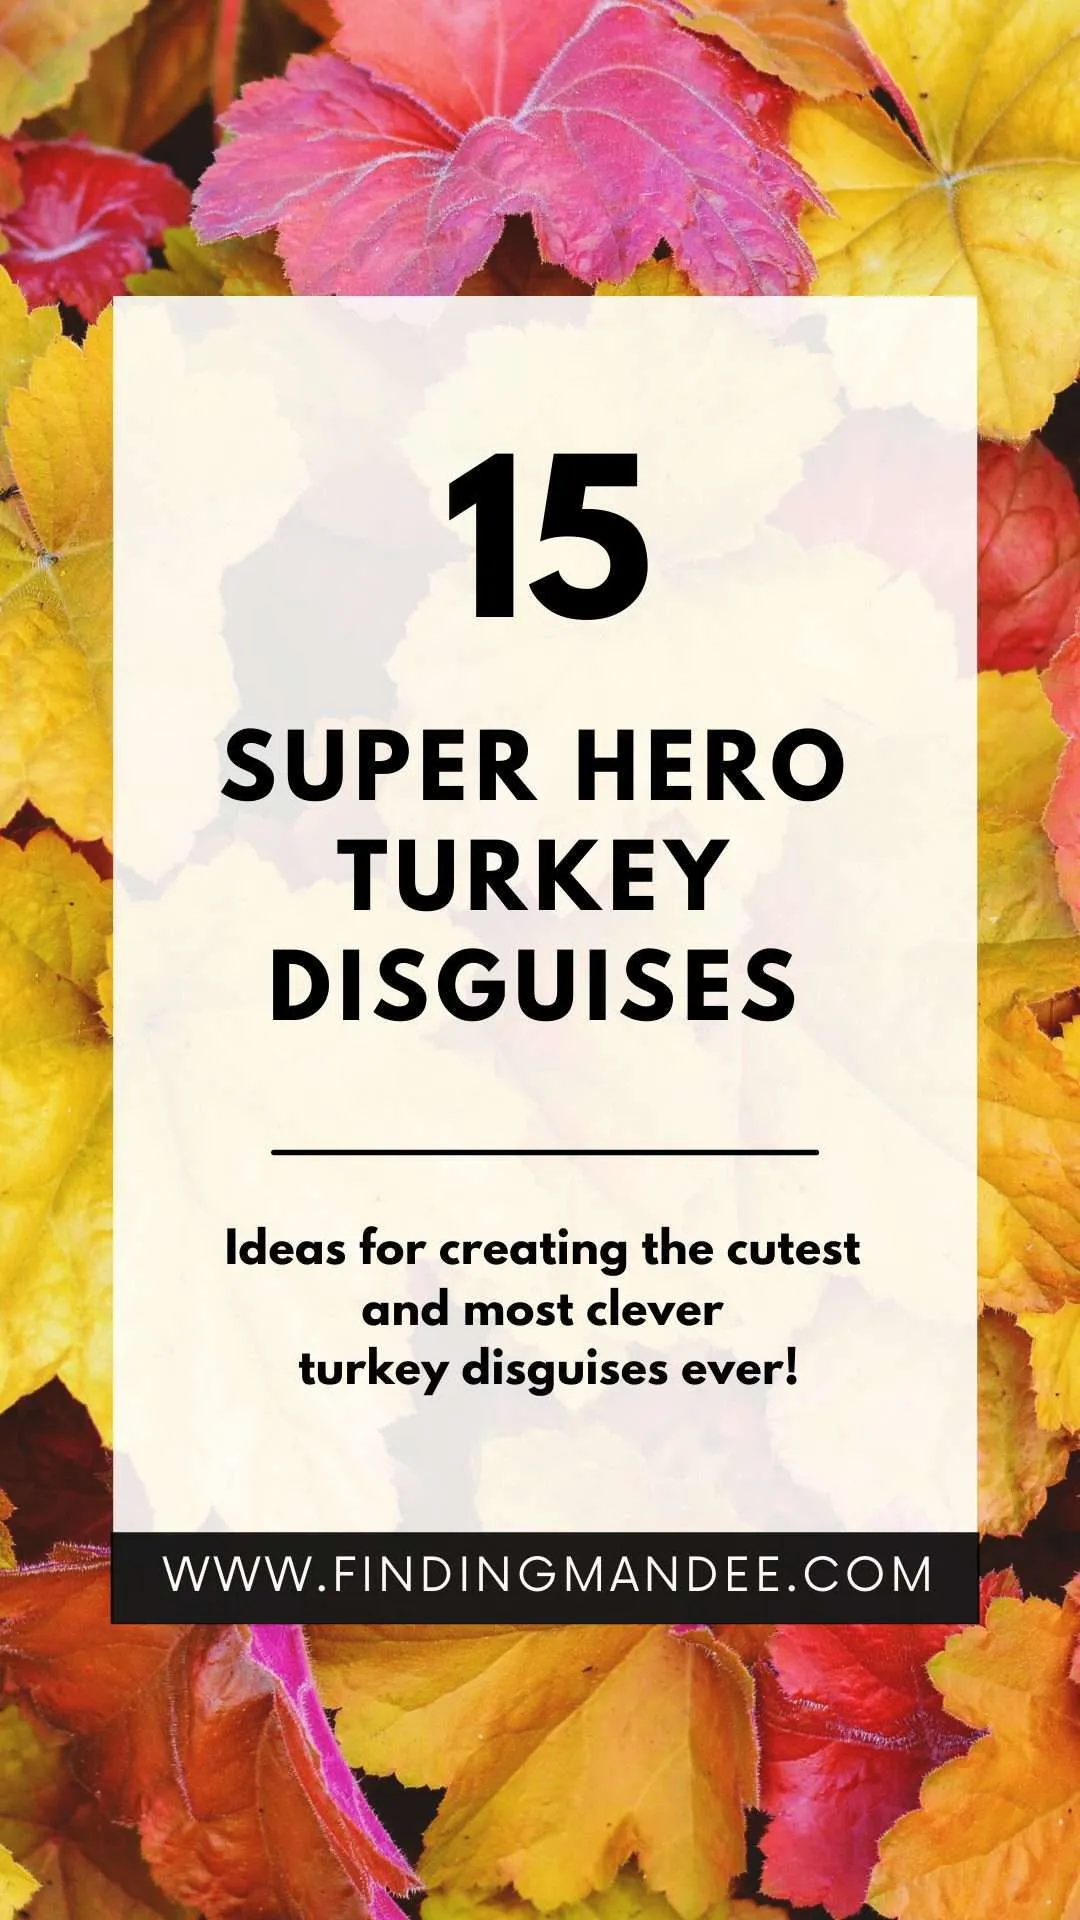 15 Super Hero Turkey Disguises | Finding Mandee